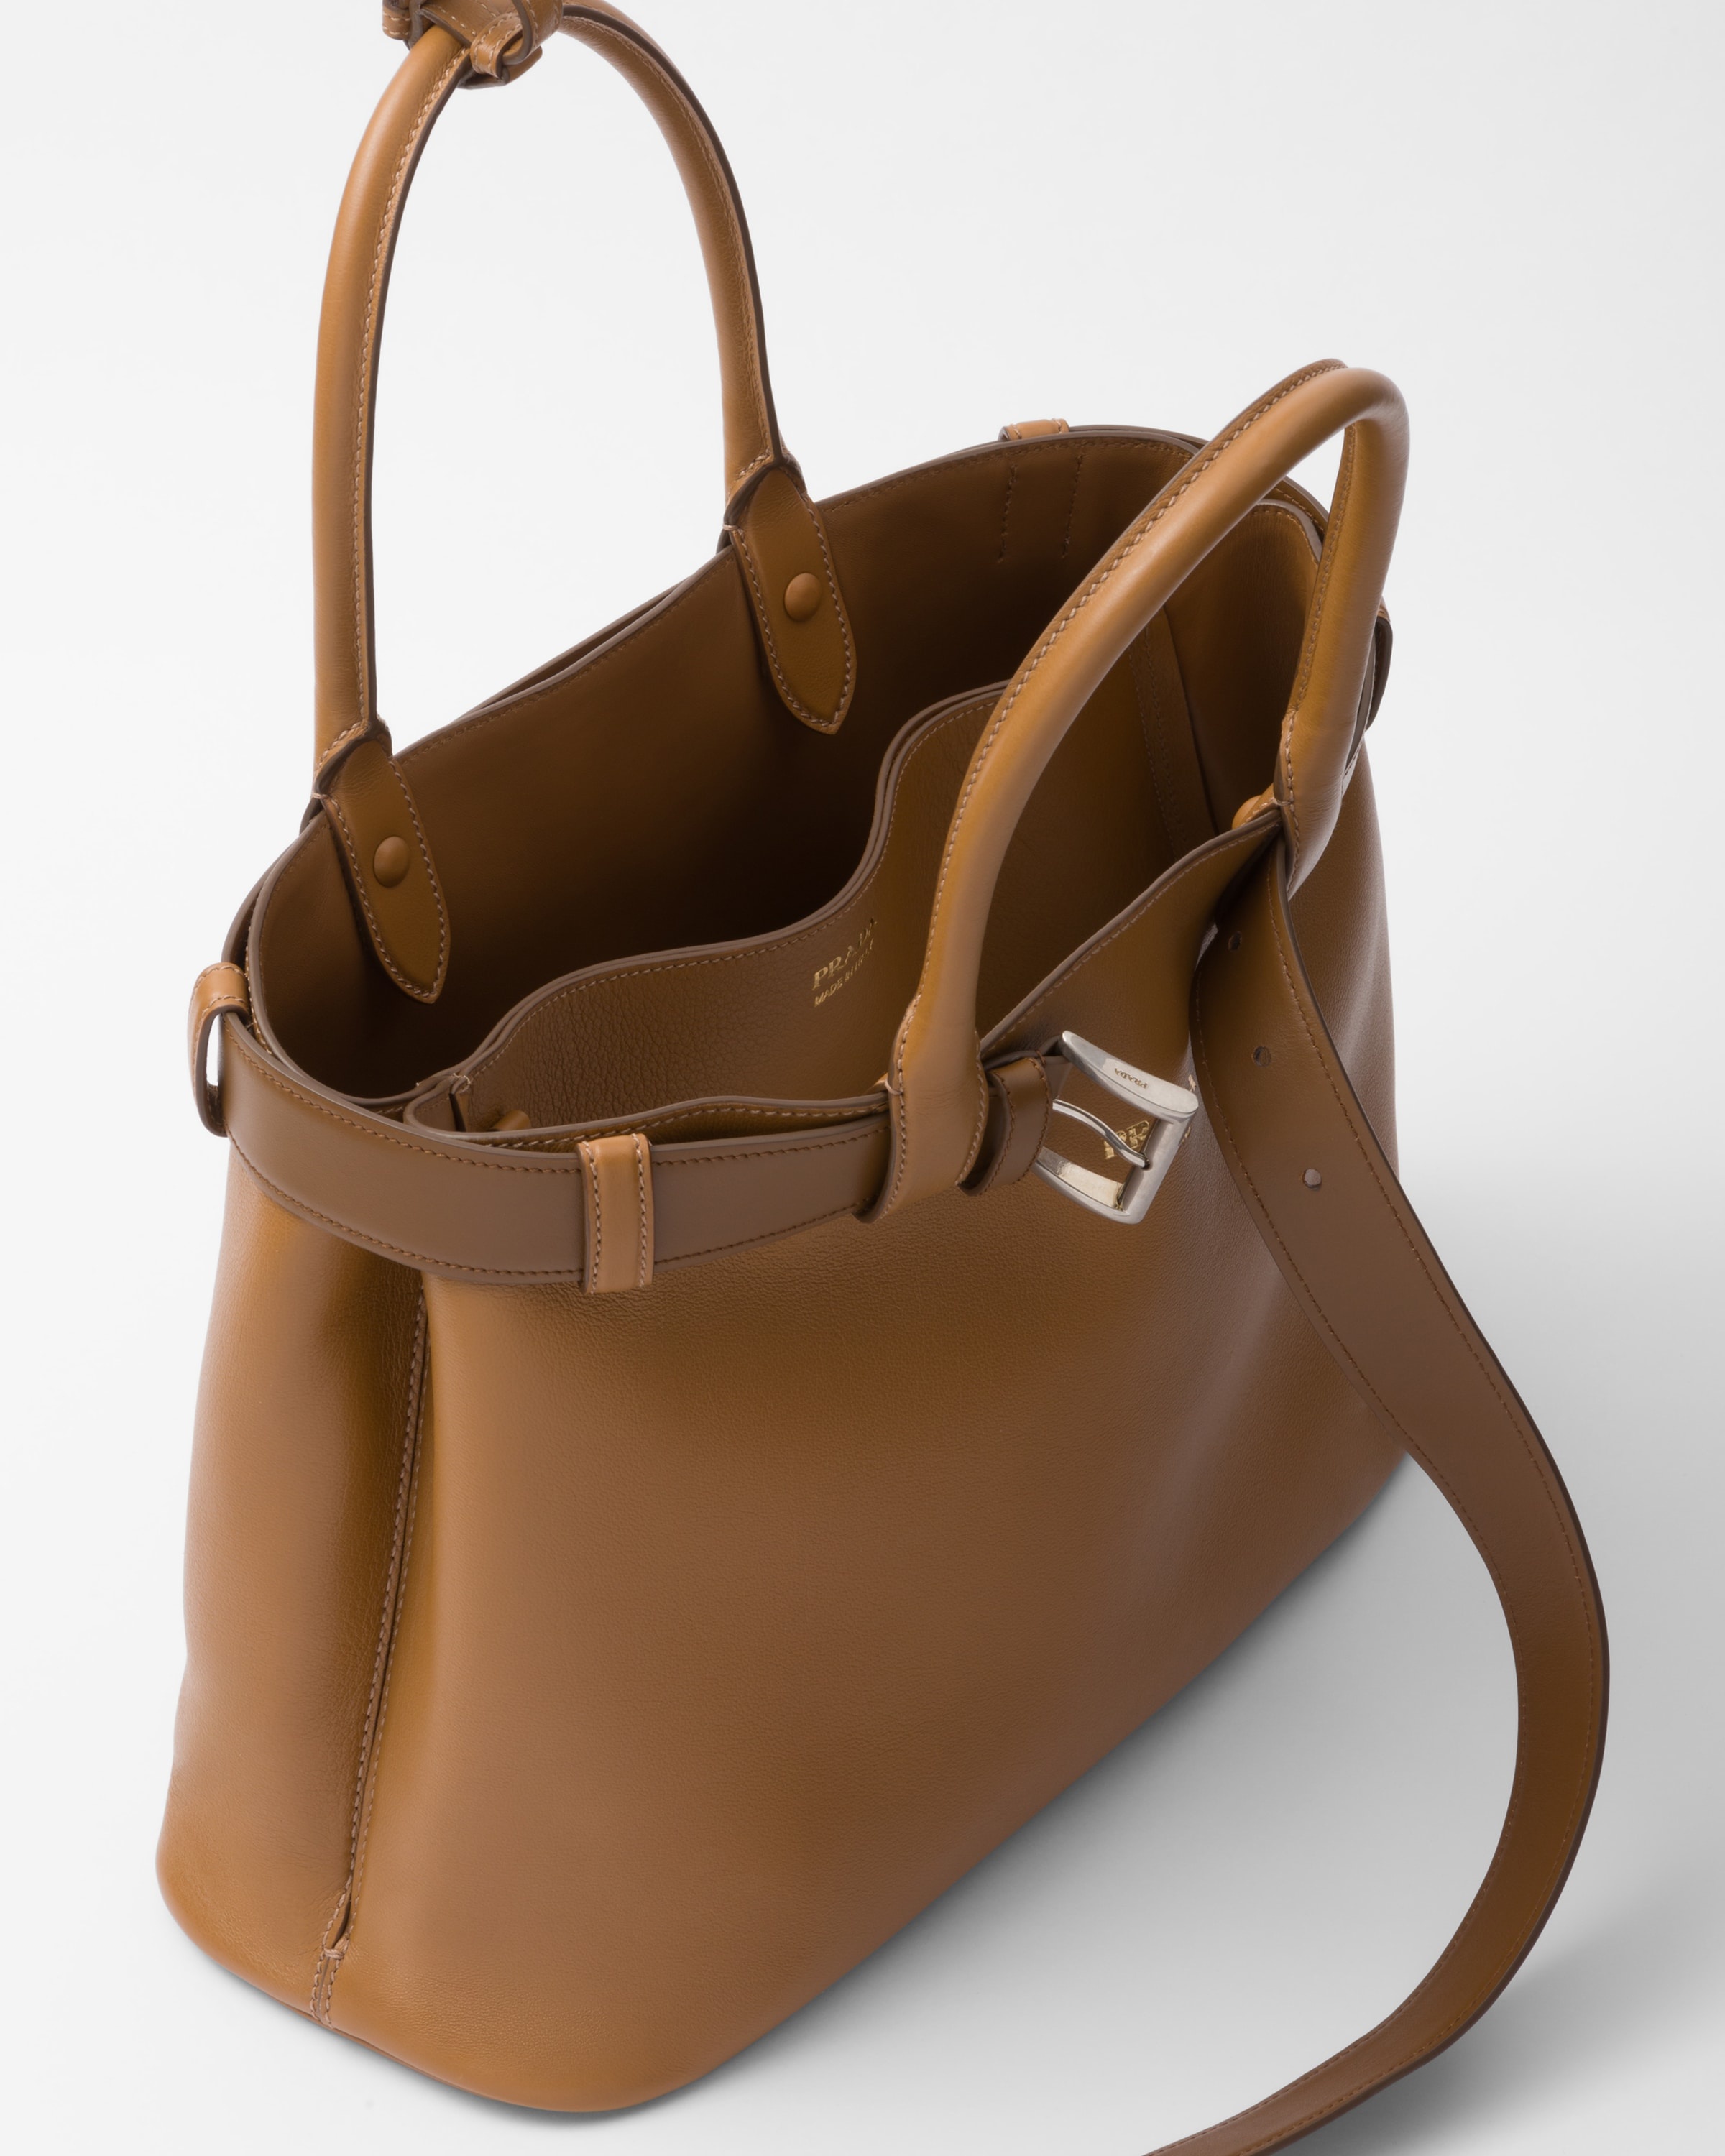 Prada Buckle large leather handbag with belt - 5